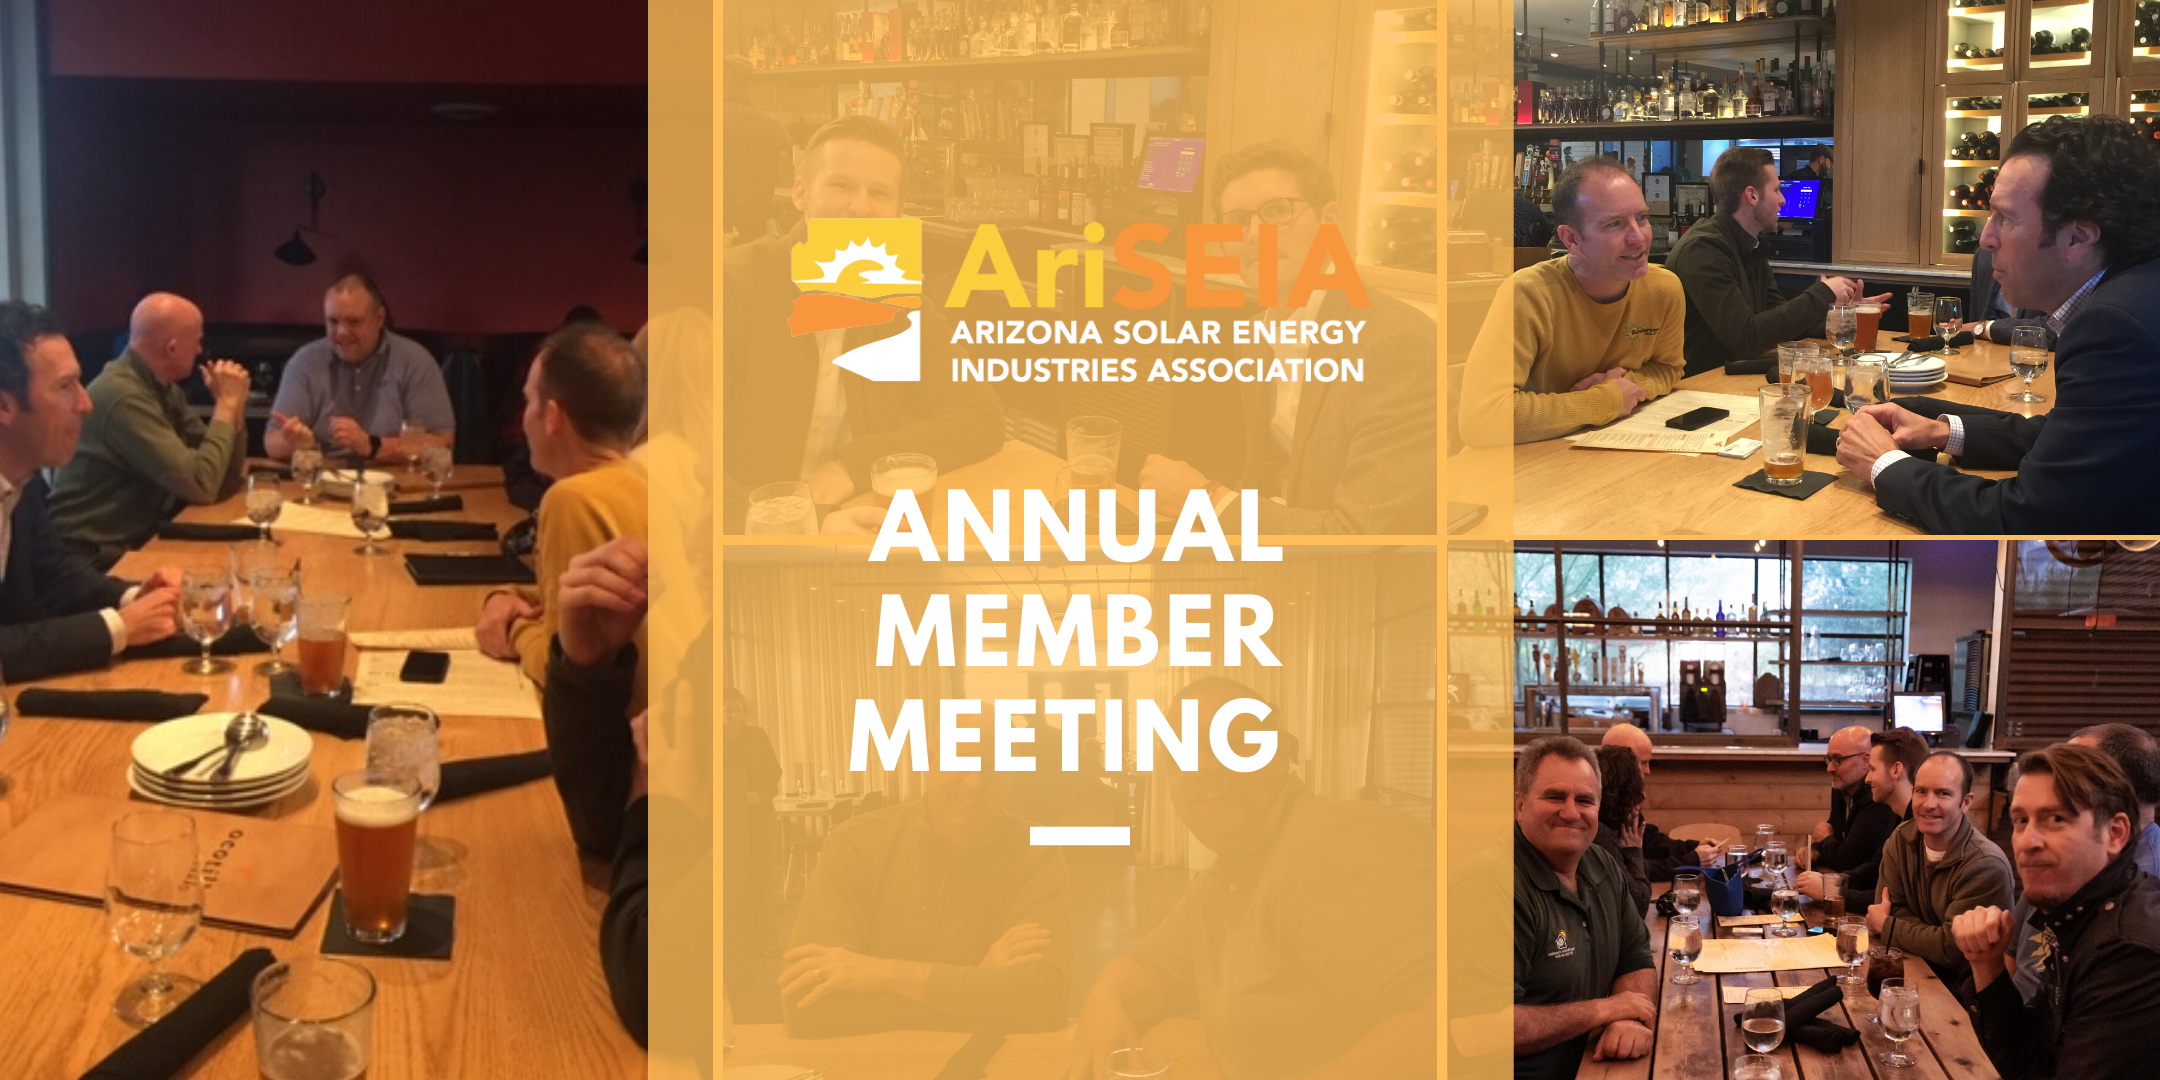 AriSEIA Annual Member Meeting